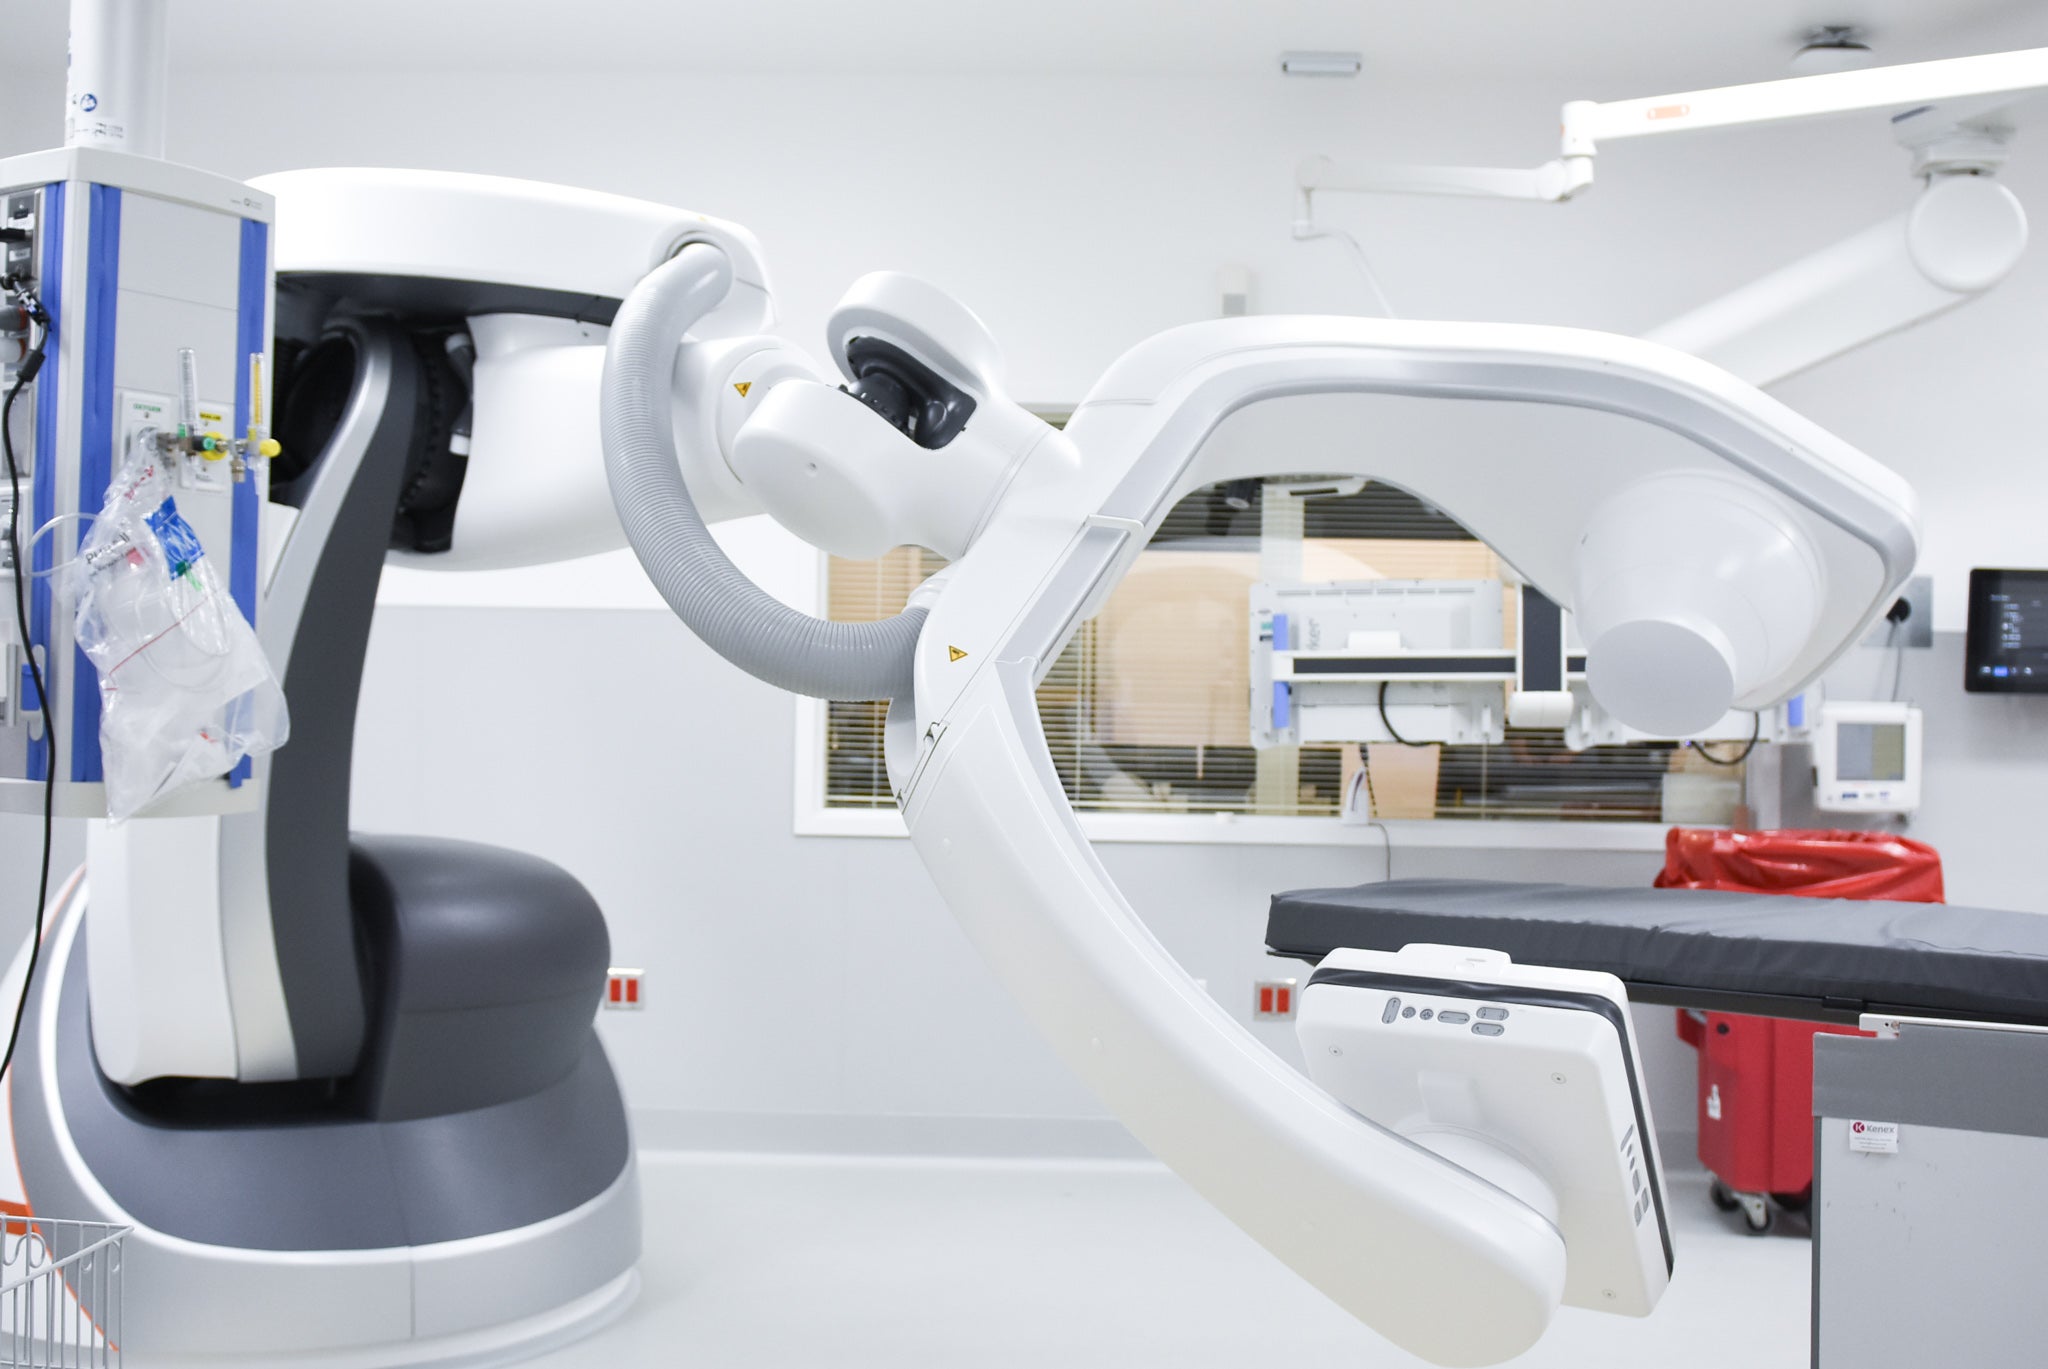 UVA Radiology IR procedure room